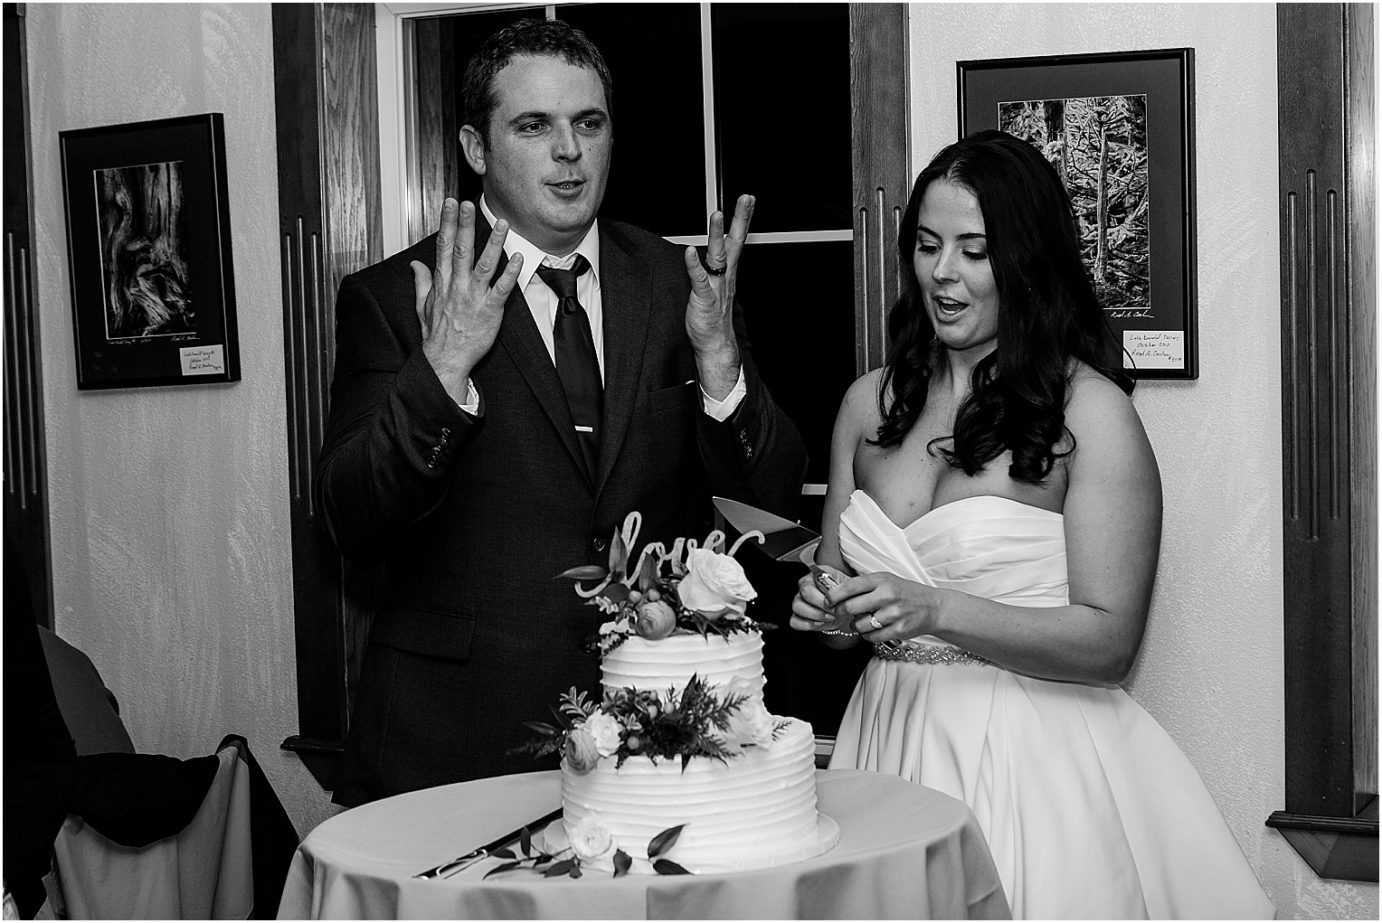 Favorite Wedding moments of 2017 Misty C. Photography Blog